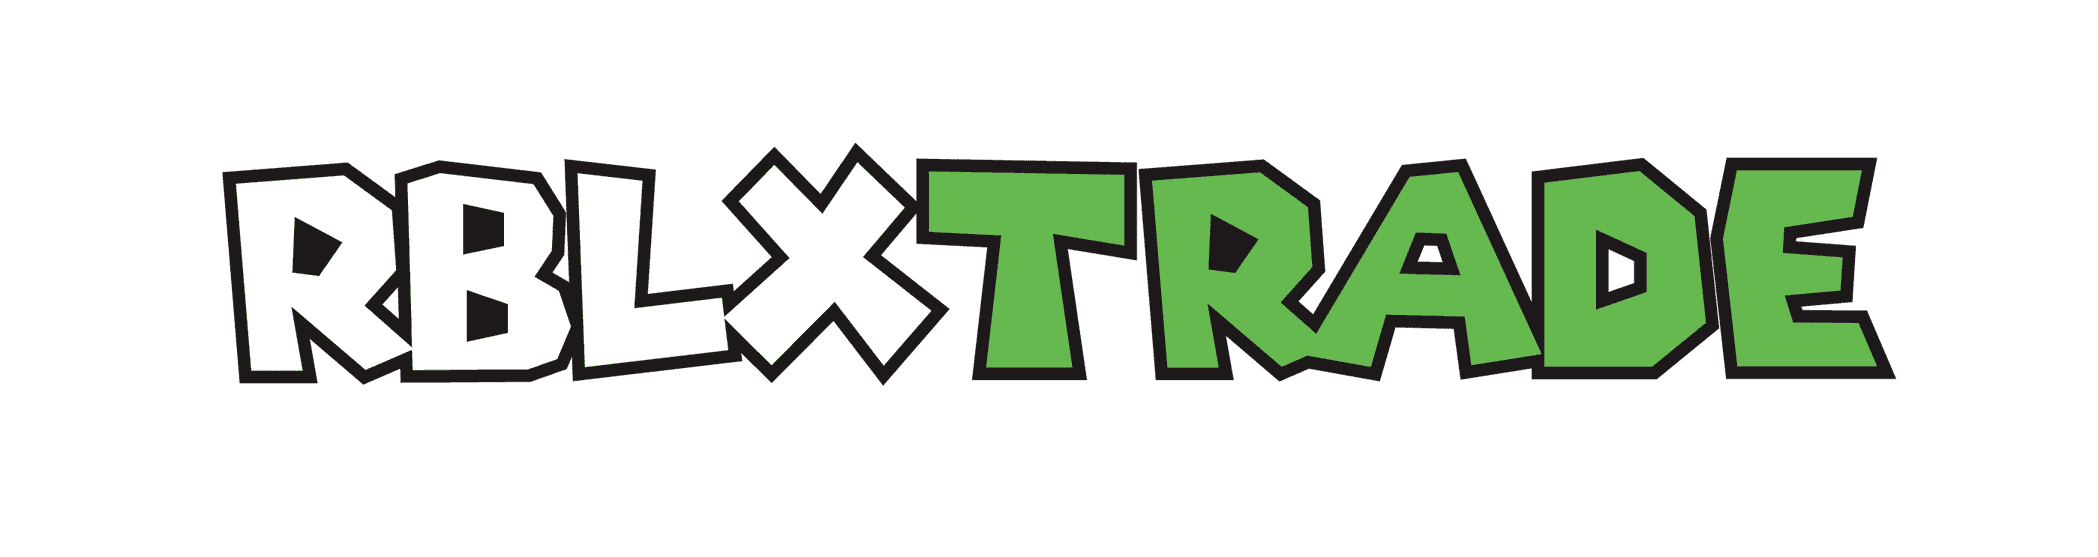 User Leaderboard Rblx Trade View Explore Terminated Roblox Users